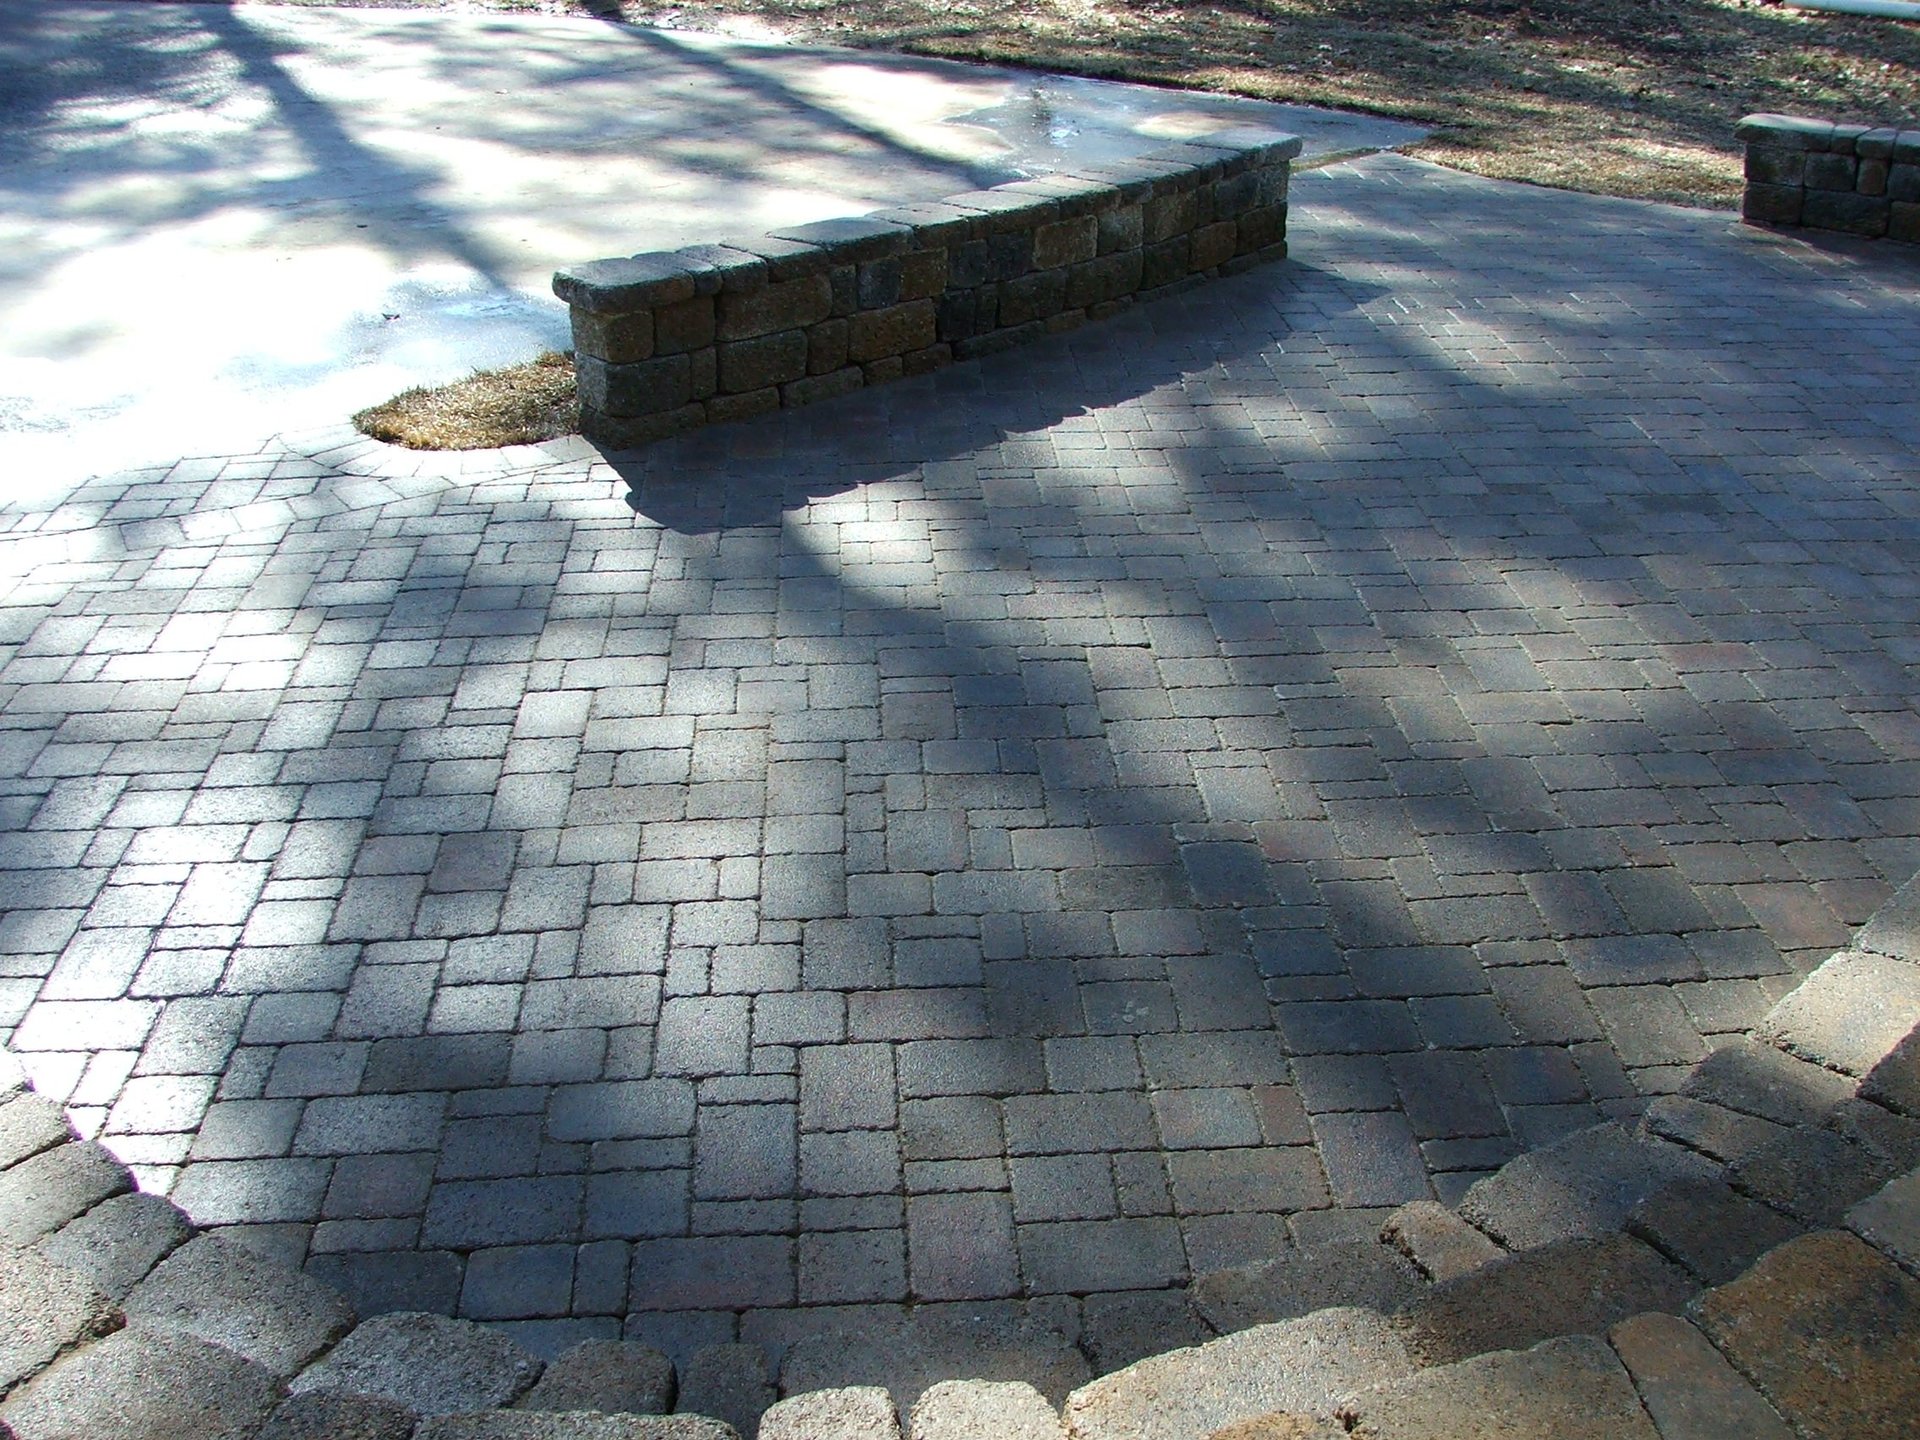 Brick-like pavers.